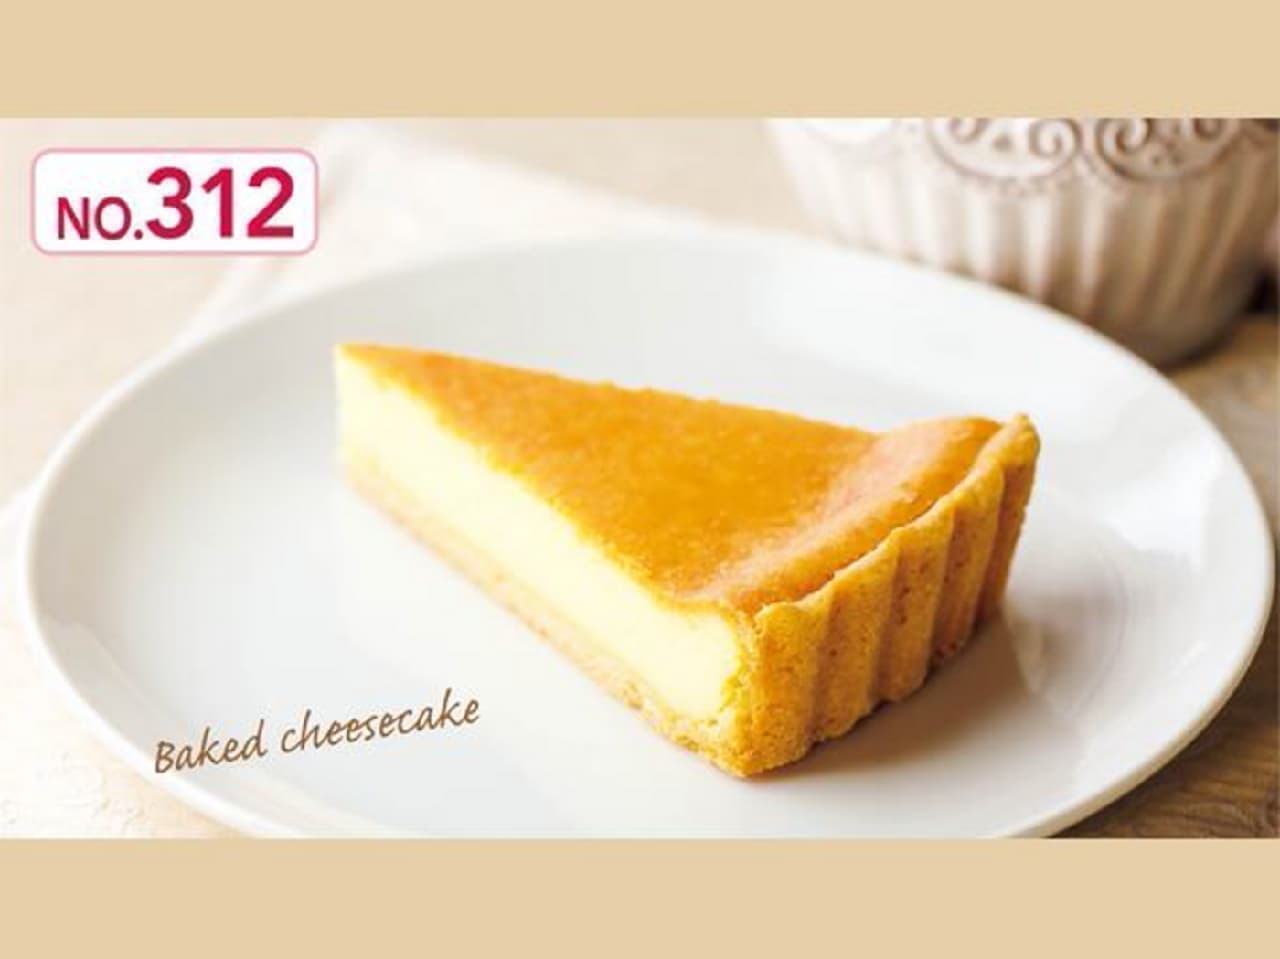 Gusto "Baked Cheesecake